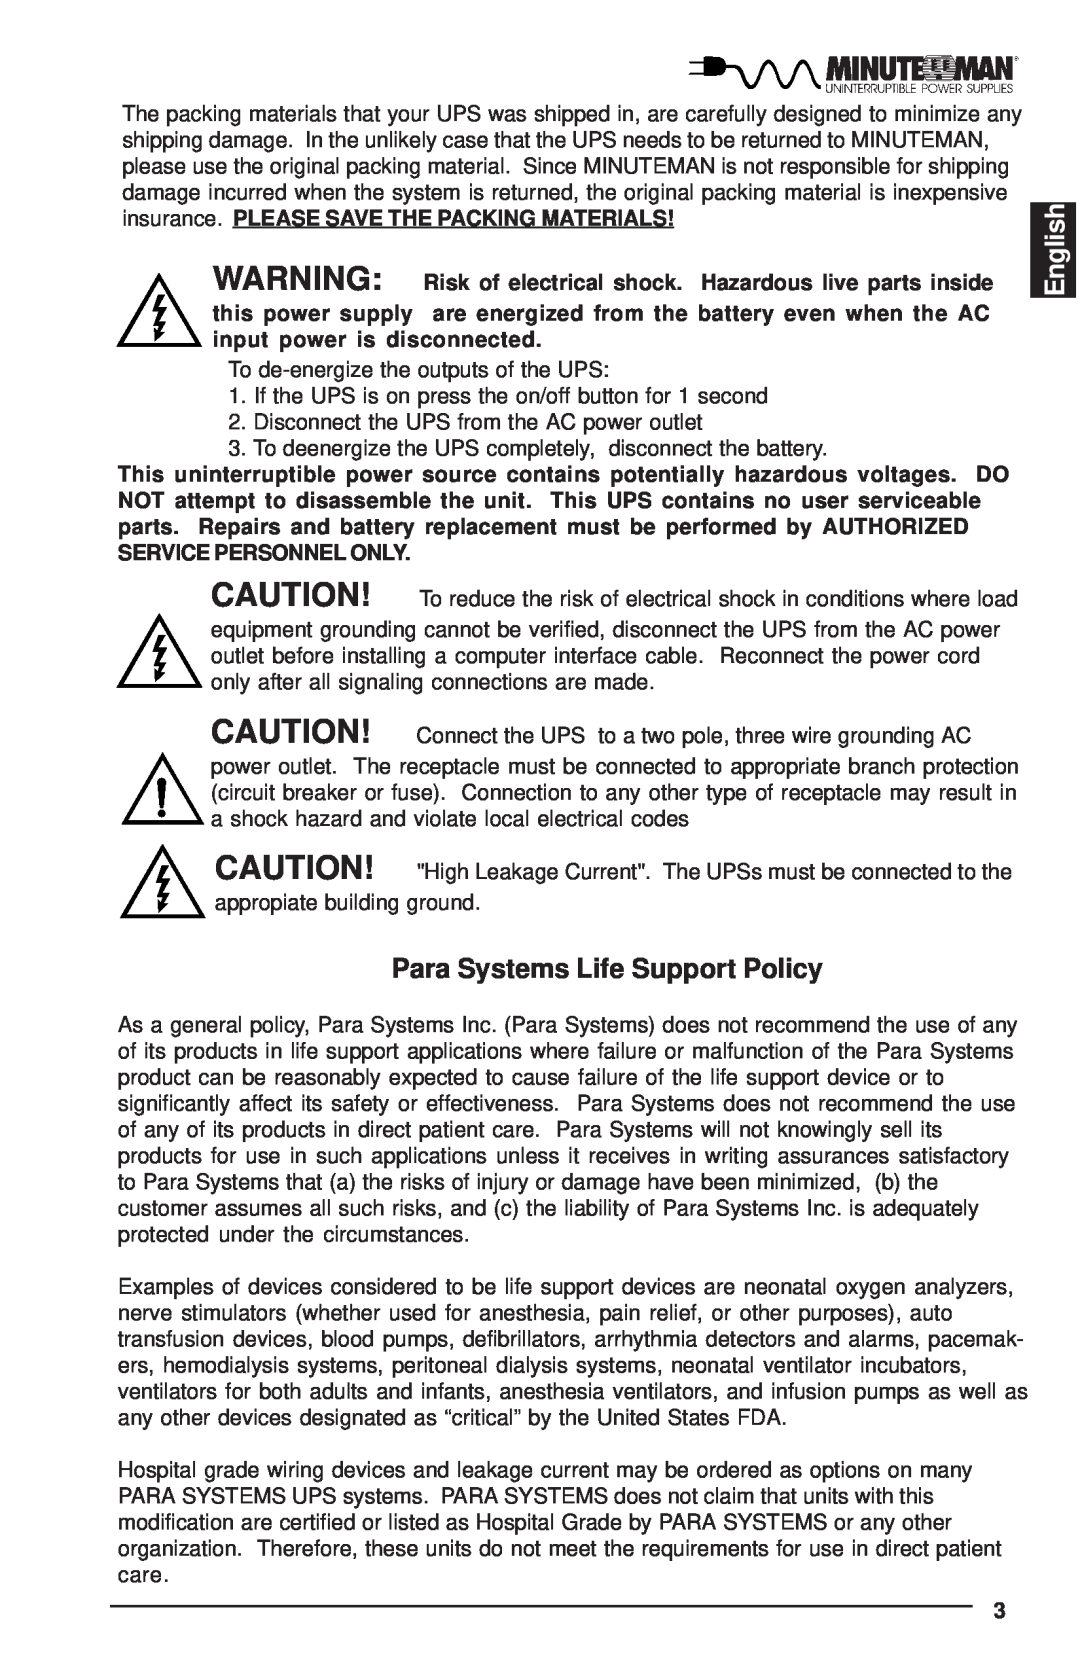 Minuteman UPS MCP-E user manual Para Systems Life Support Policy, English 